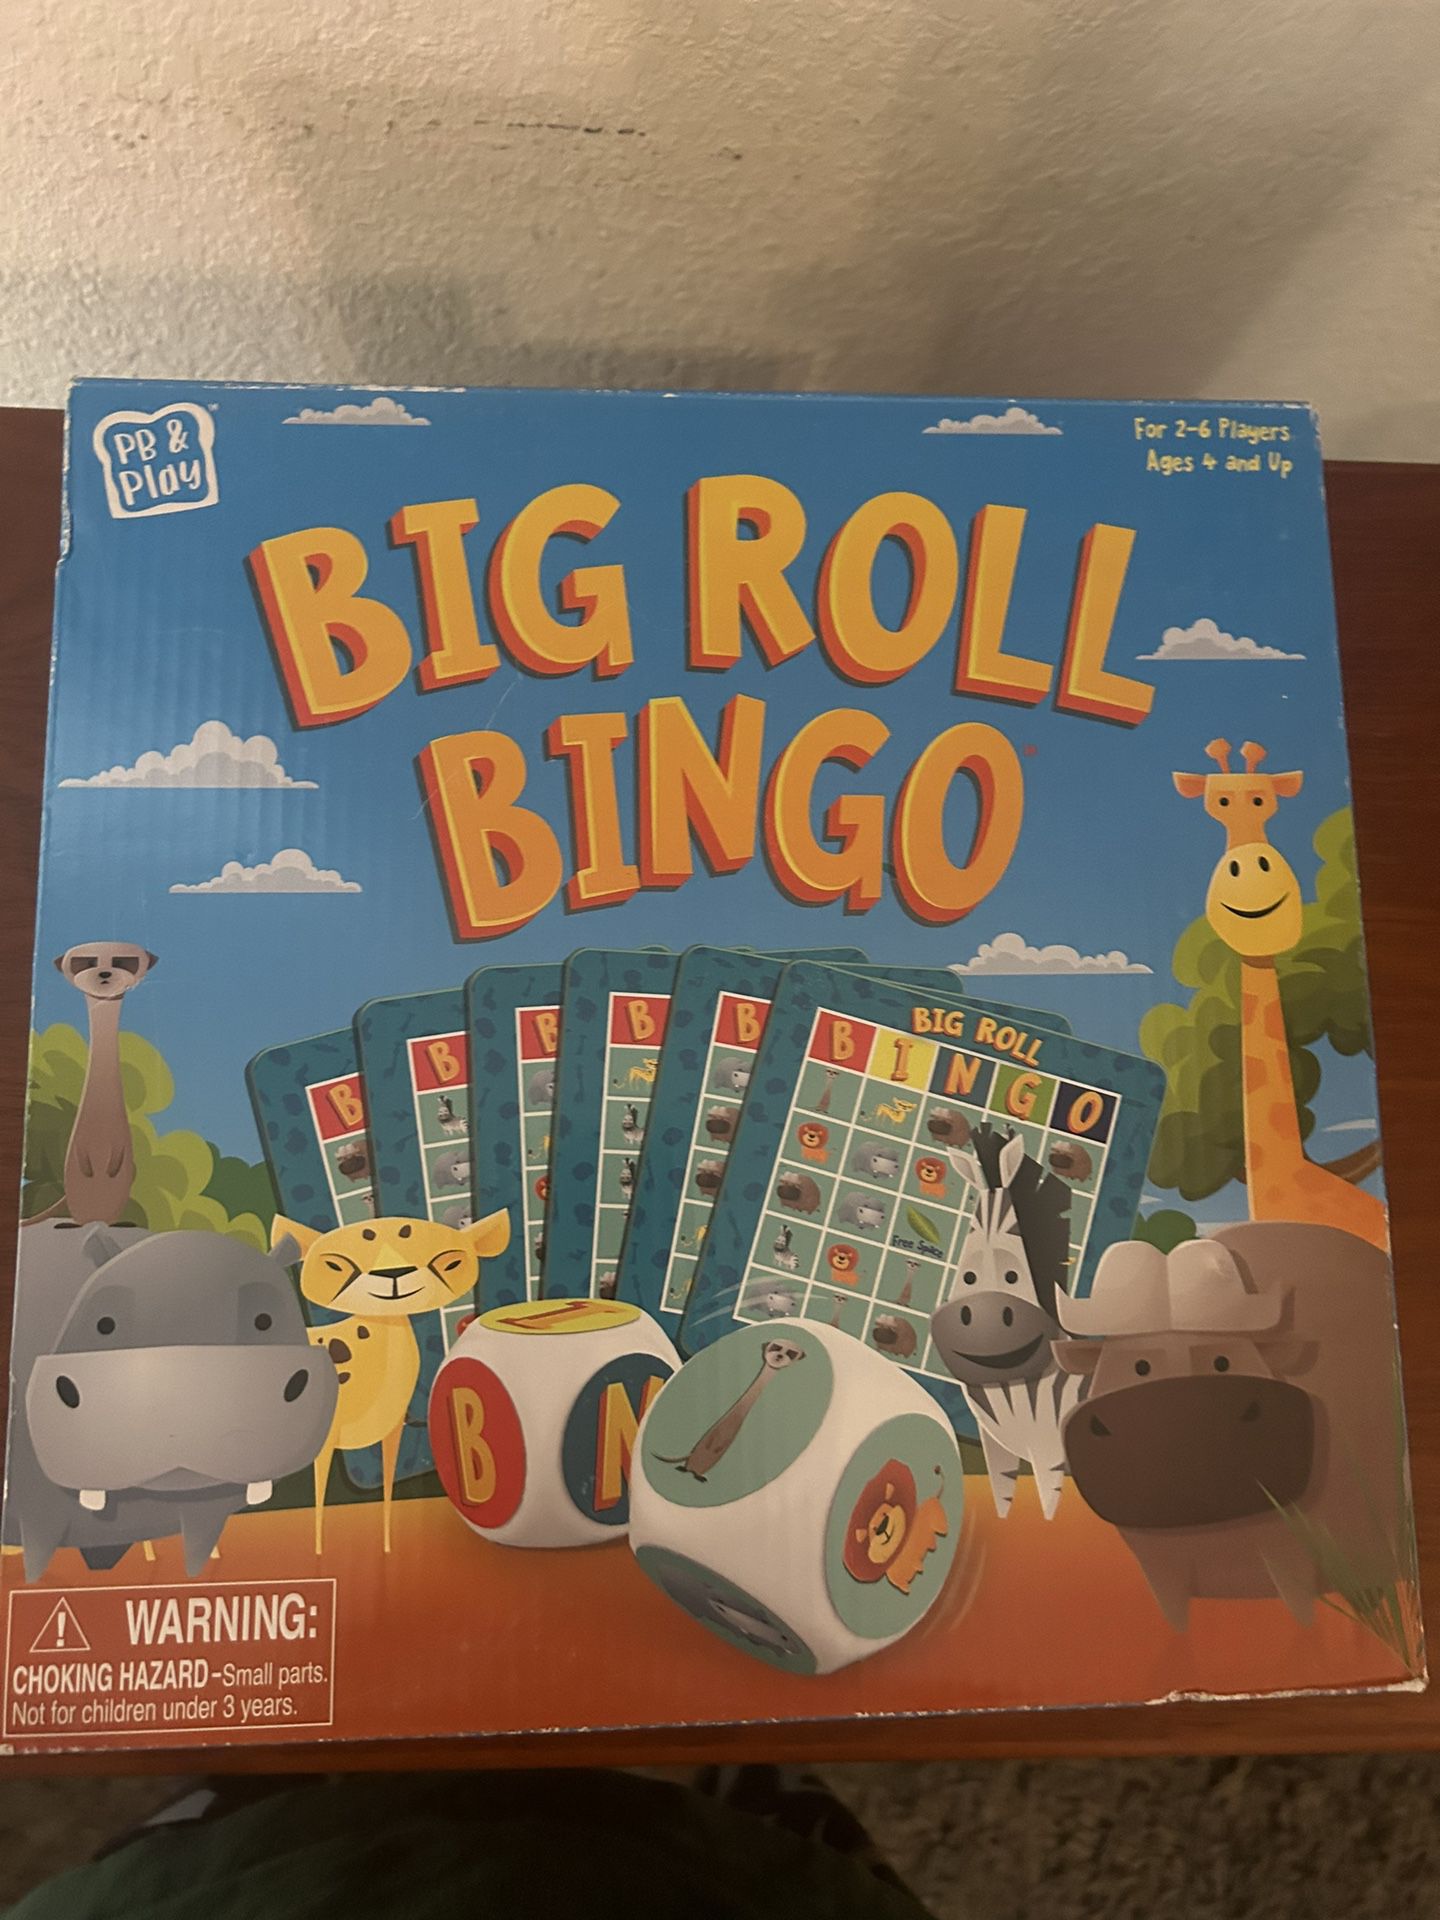 Big Roll Bingo Game with Safari Animals by Pressman 2-6 Players Ages 4+ NEW